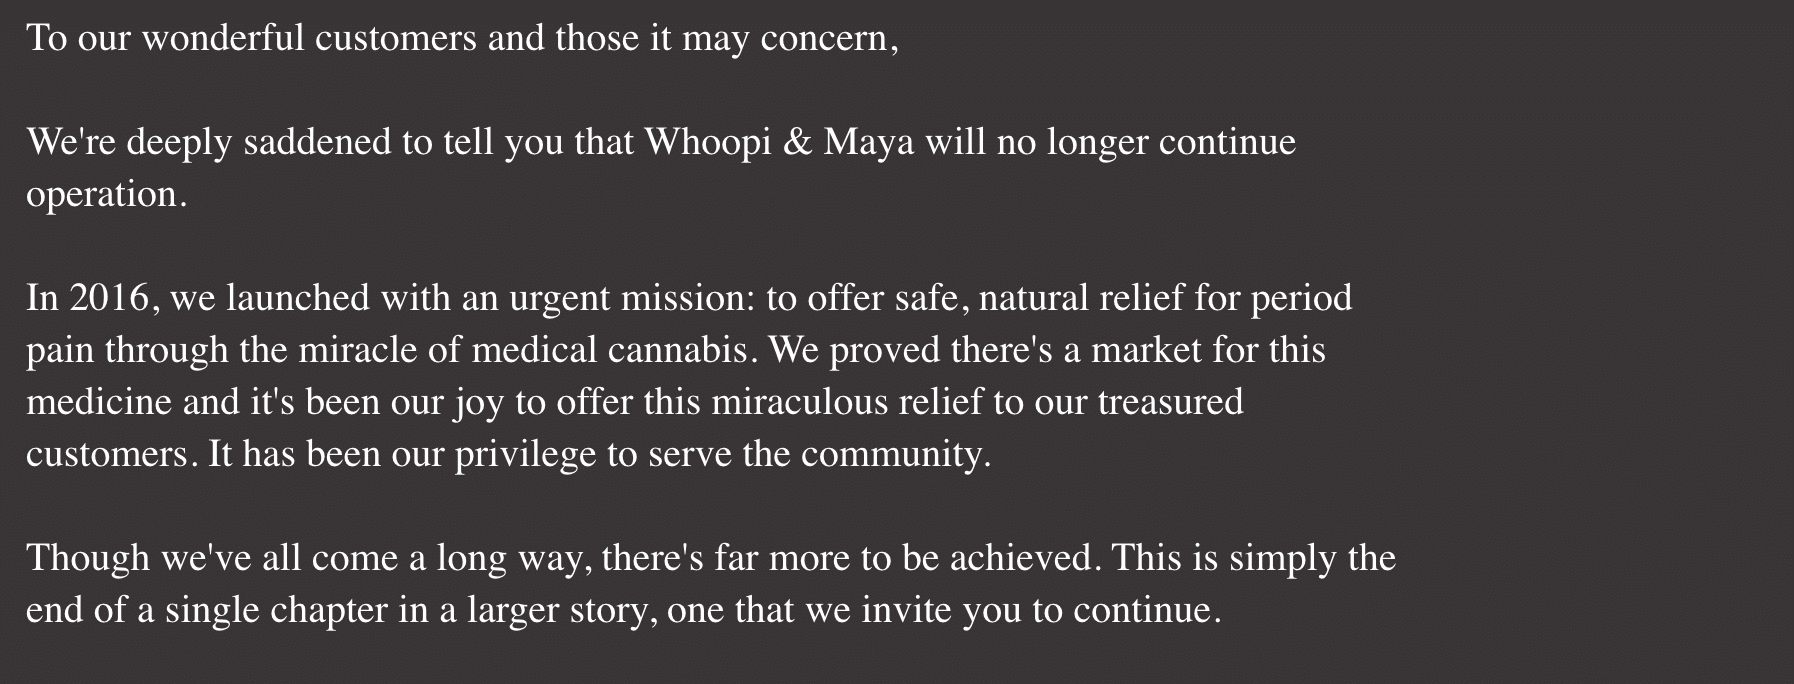 whoopi Goldberg cannabis business has closed down